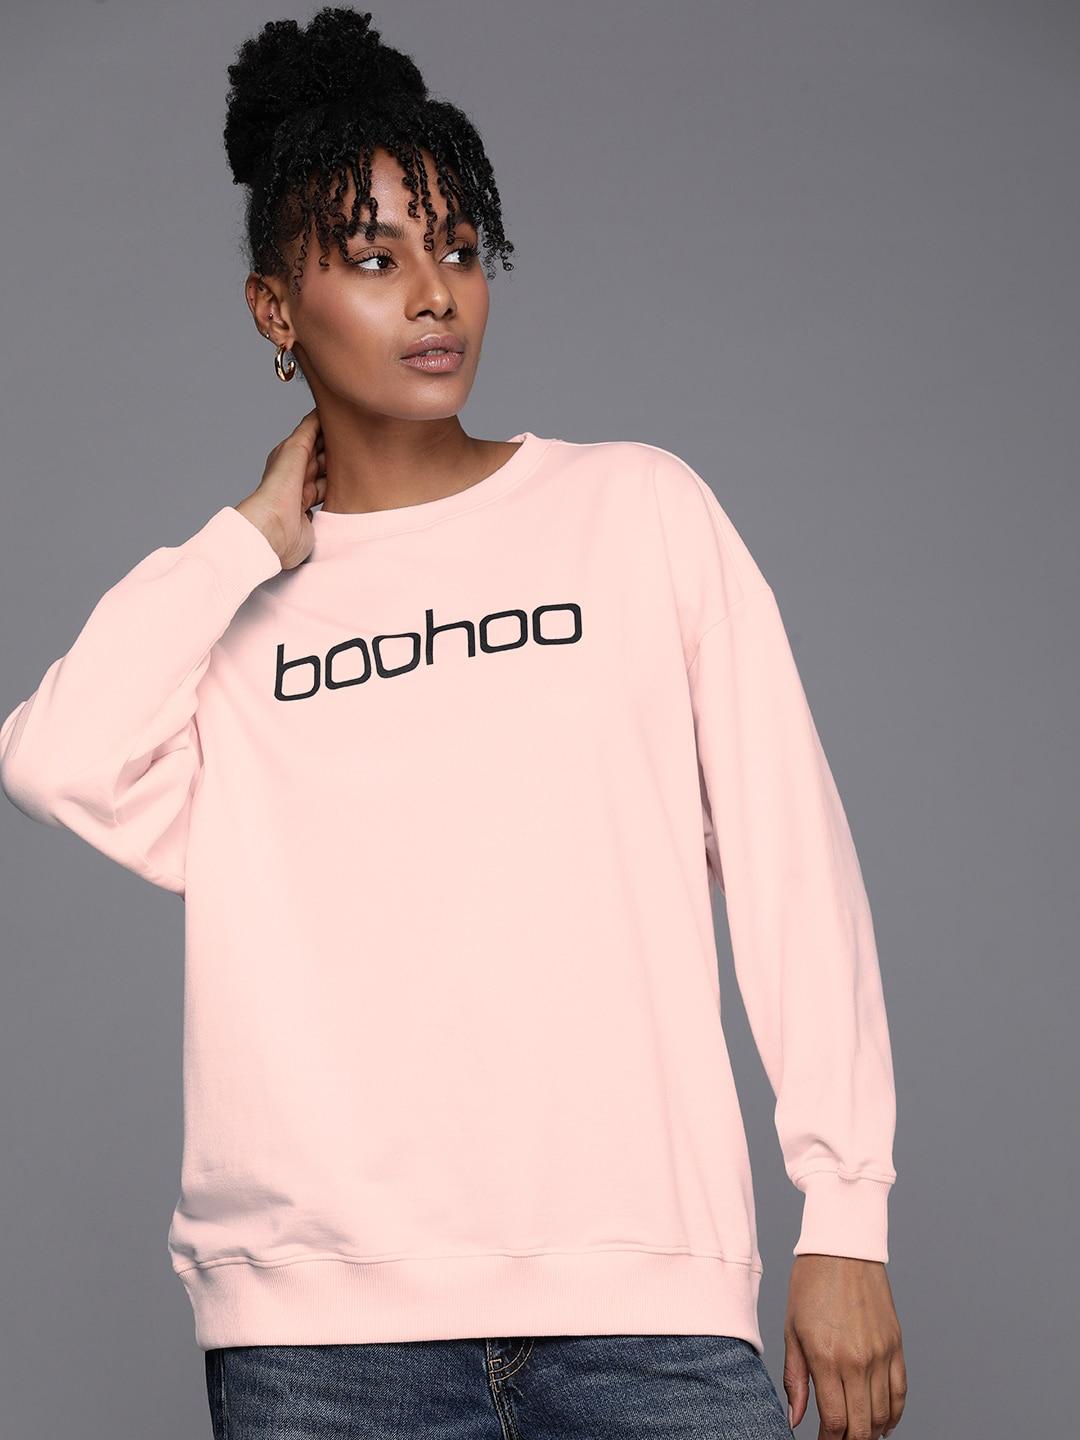 Boohoo Brand Logo Printed Long Sleeves Sweatshirt